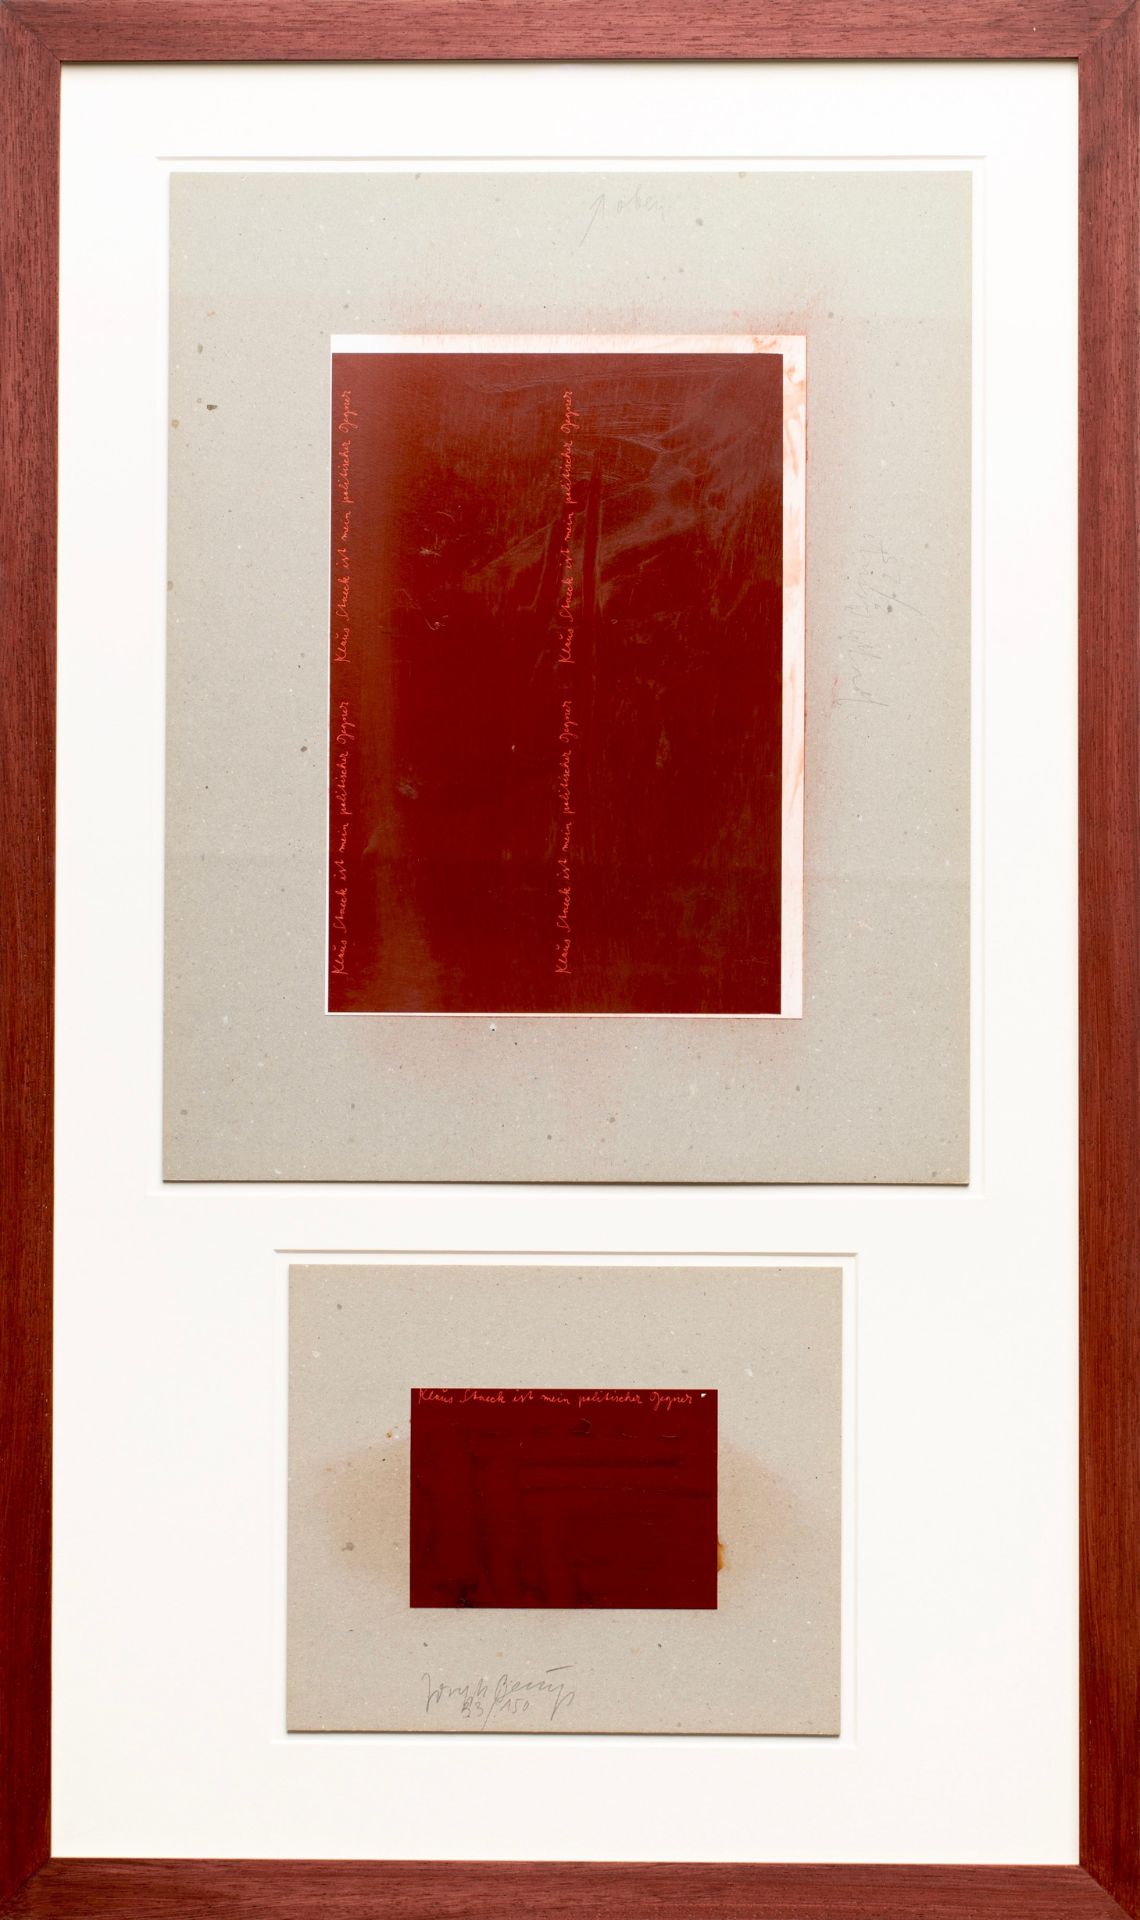 Joseph Beuys*, 2x Klaus Staeck gebohnert 2/25 and 33/150